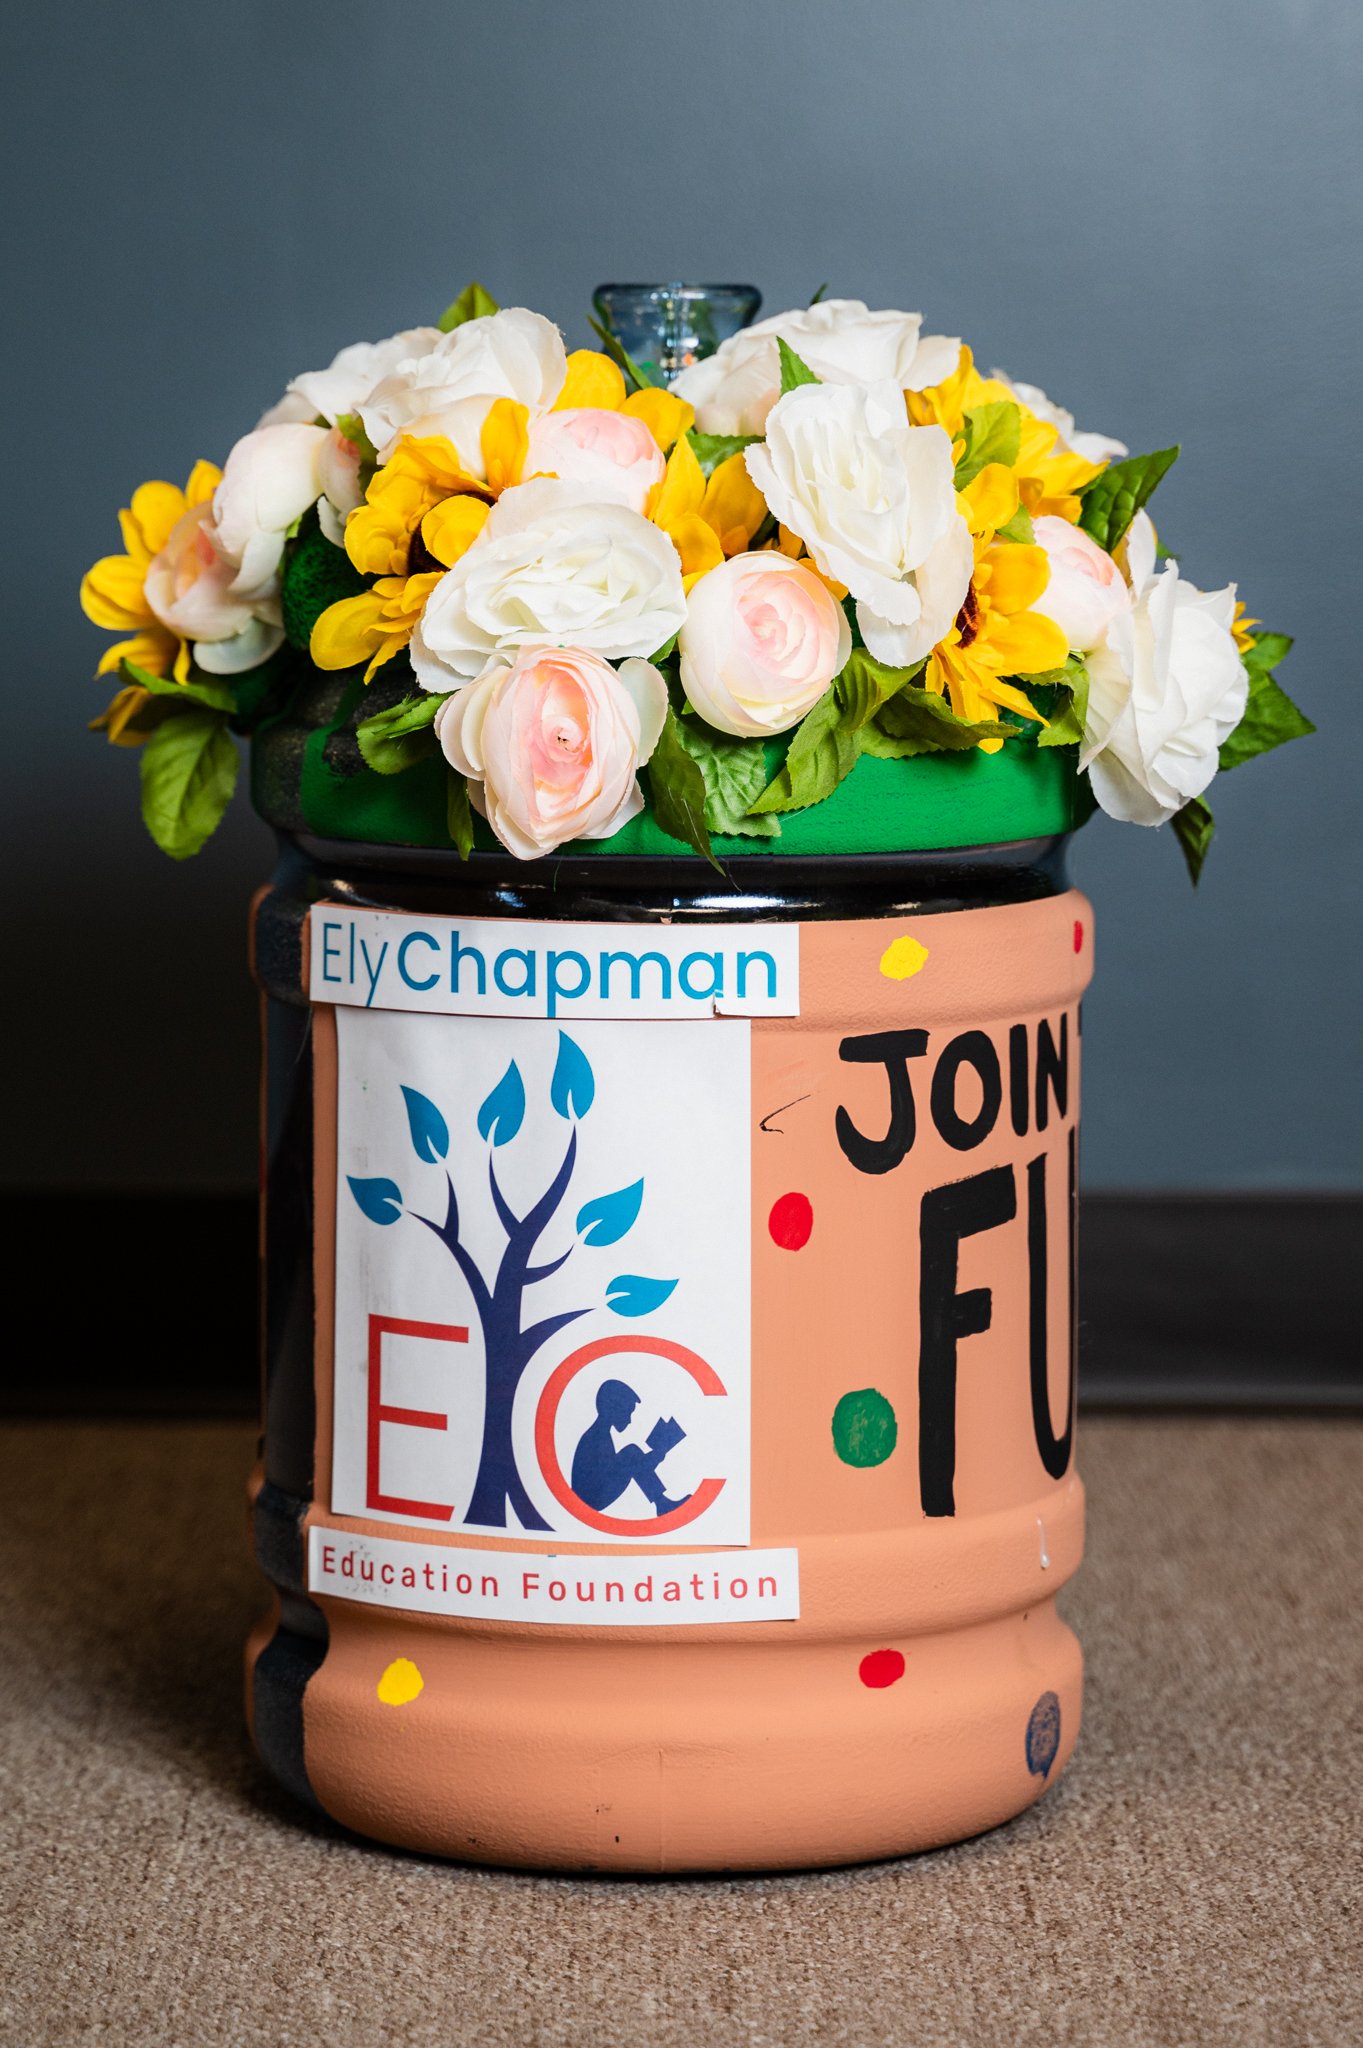 Ely Chapman Education Foundation.jpg